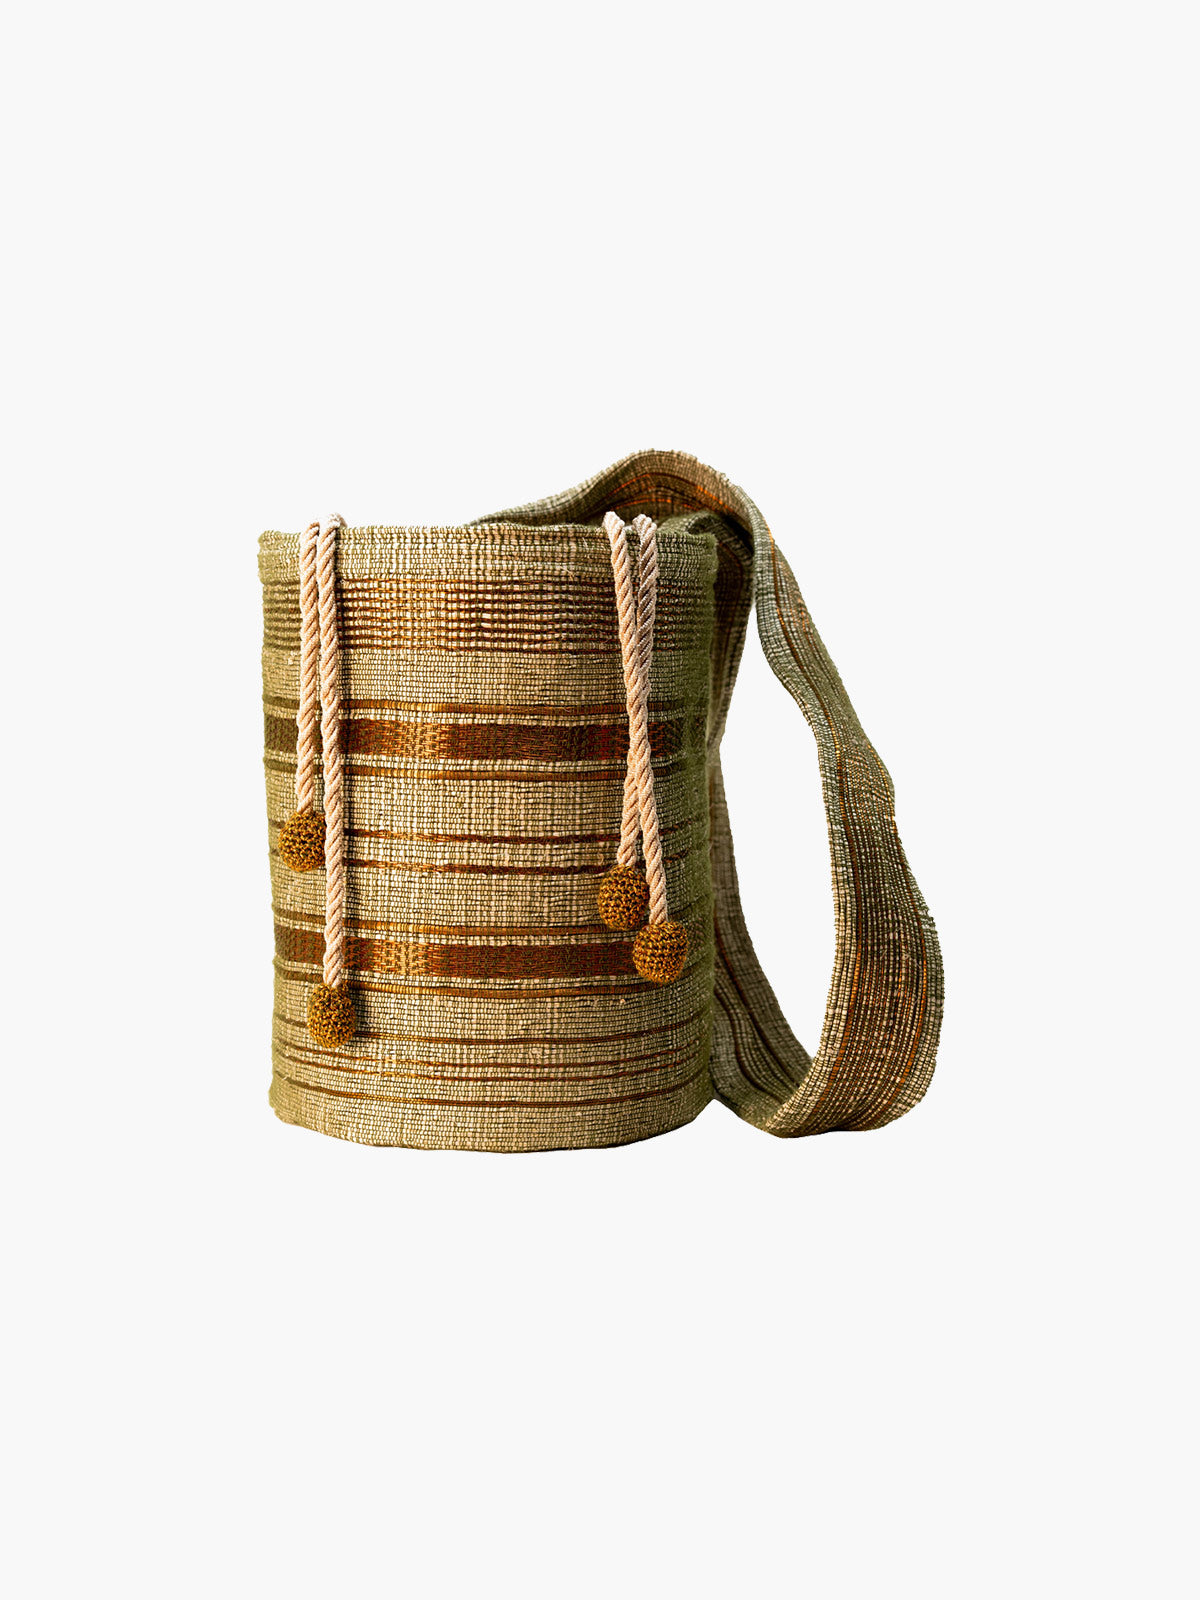 Bucket Bag | Olive & Copper - Fashionkind